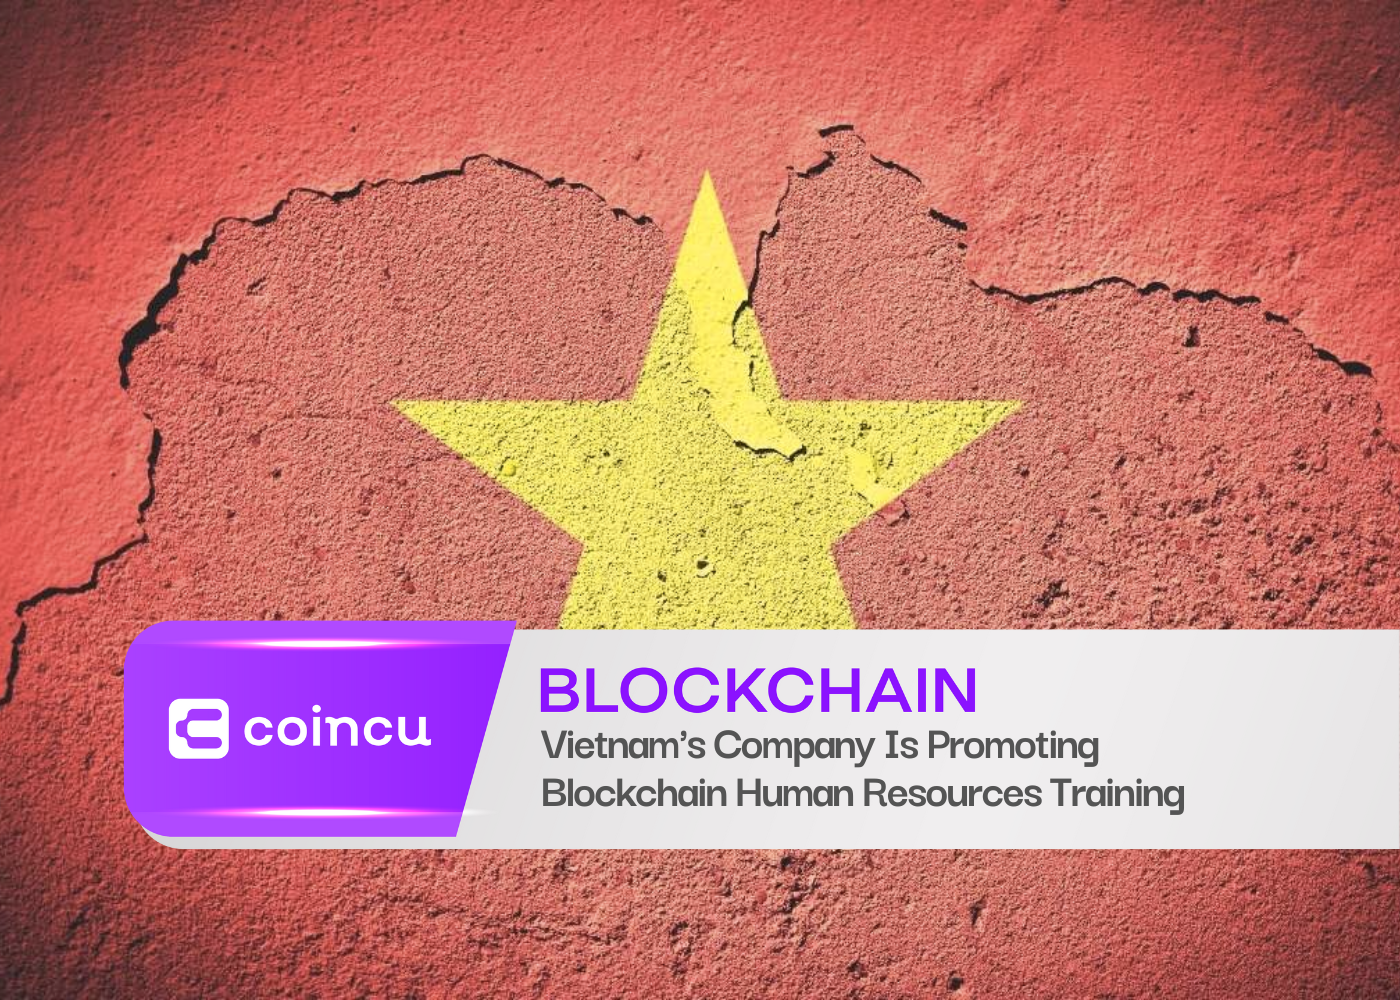 Vietnam's Company Is Promoting Blockchain Human Resources Training